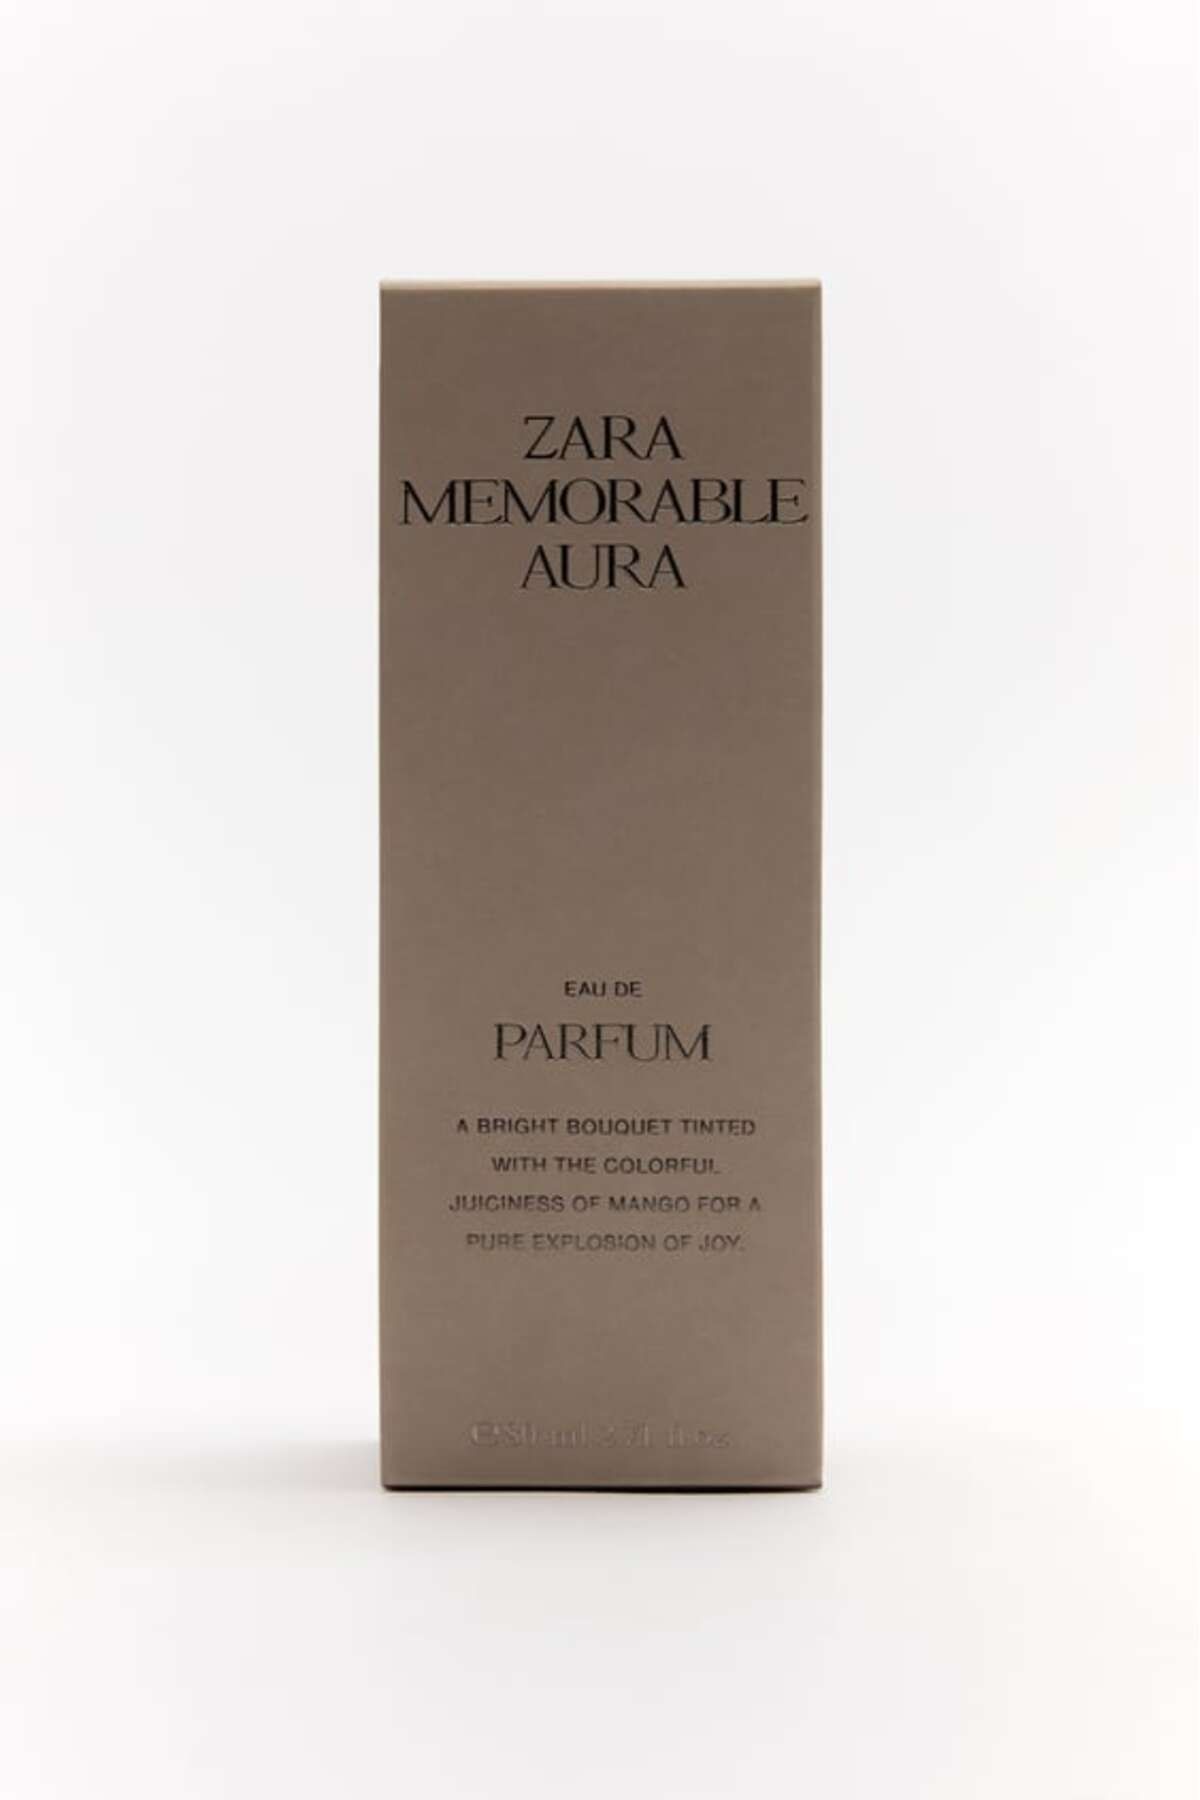 Zara AURA به یاد ماندنی ادوپرفیوم 80 ML (